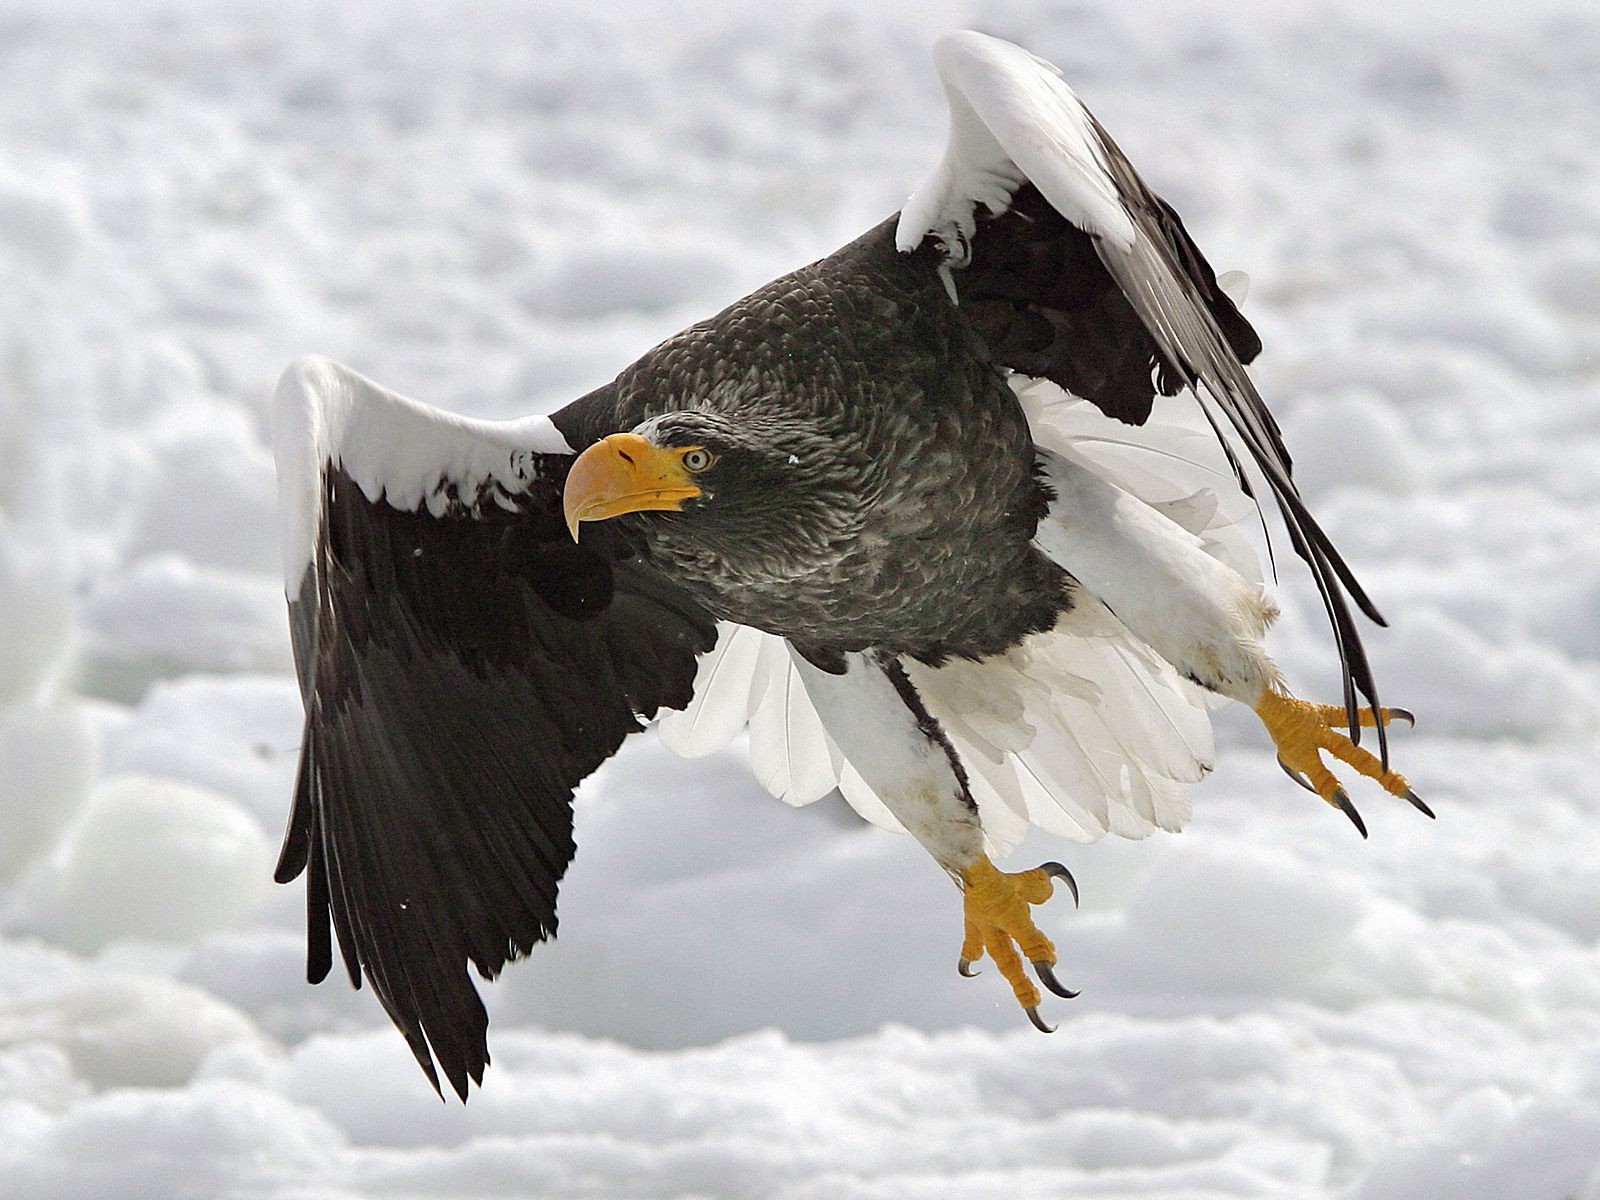 Majestic eagle soaring through the sky.